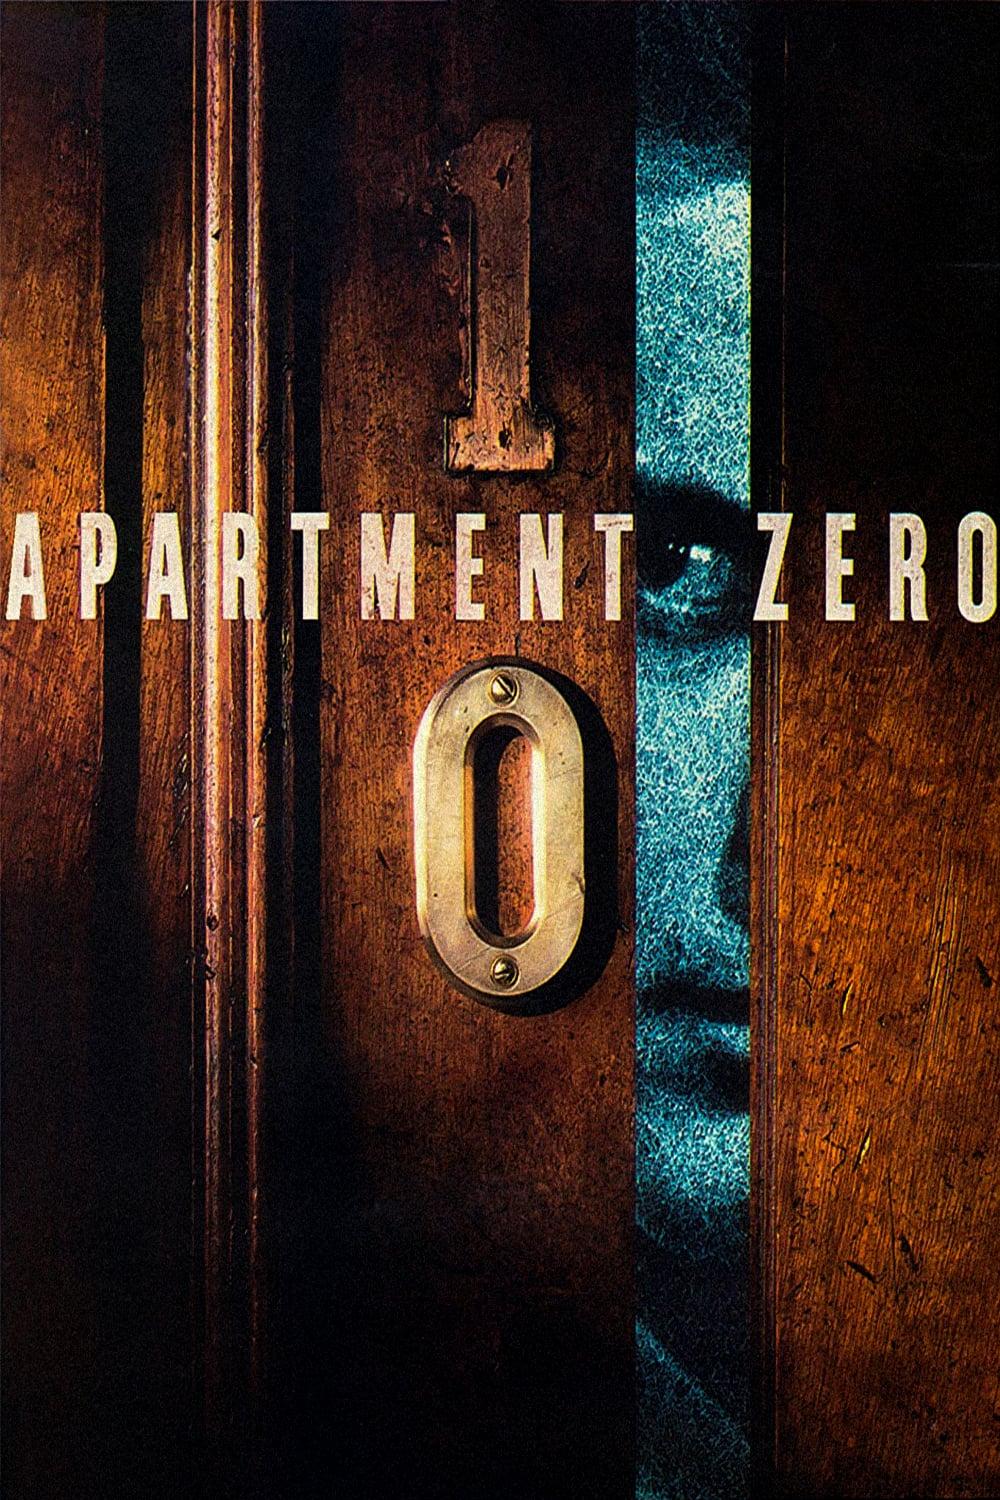 Apartment Zero poster